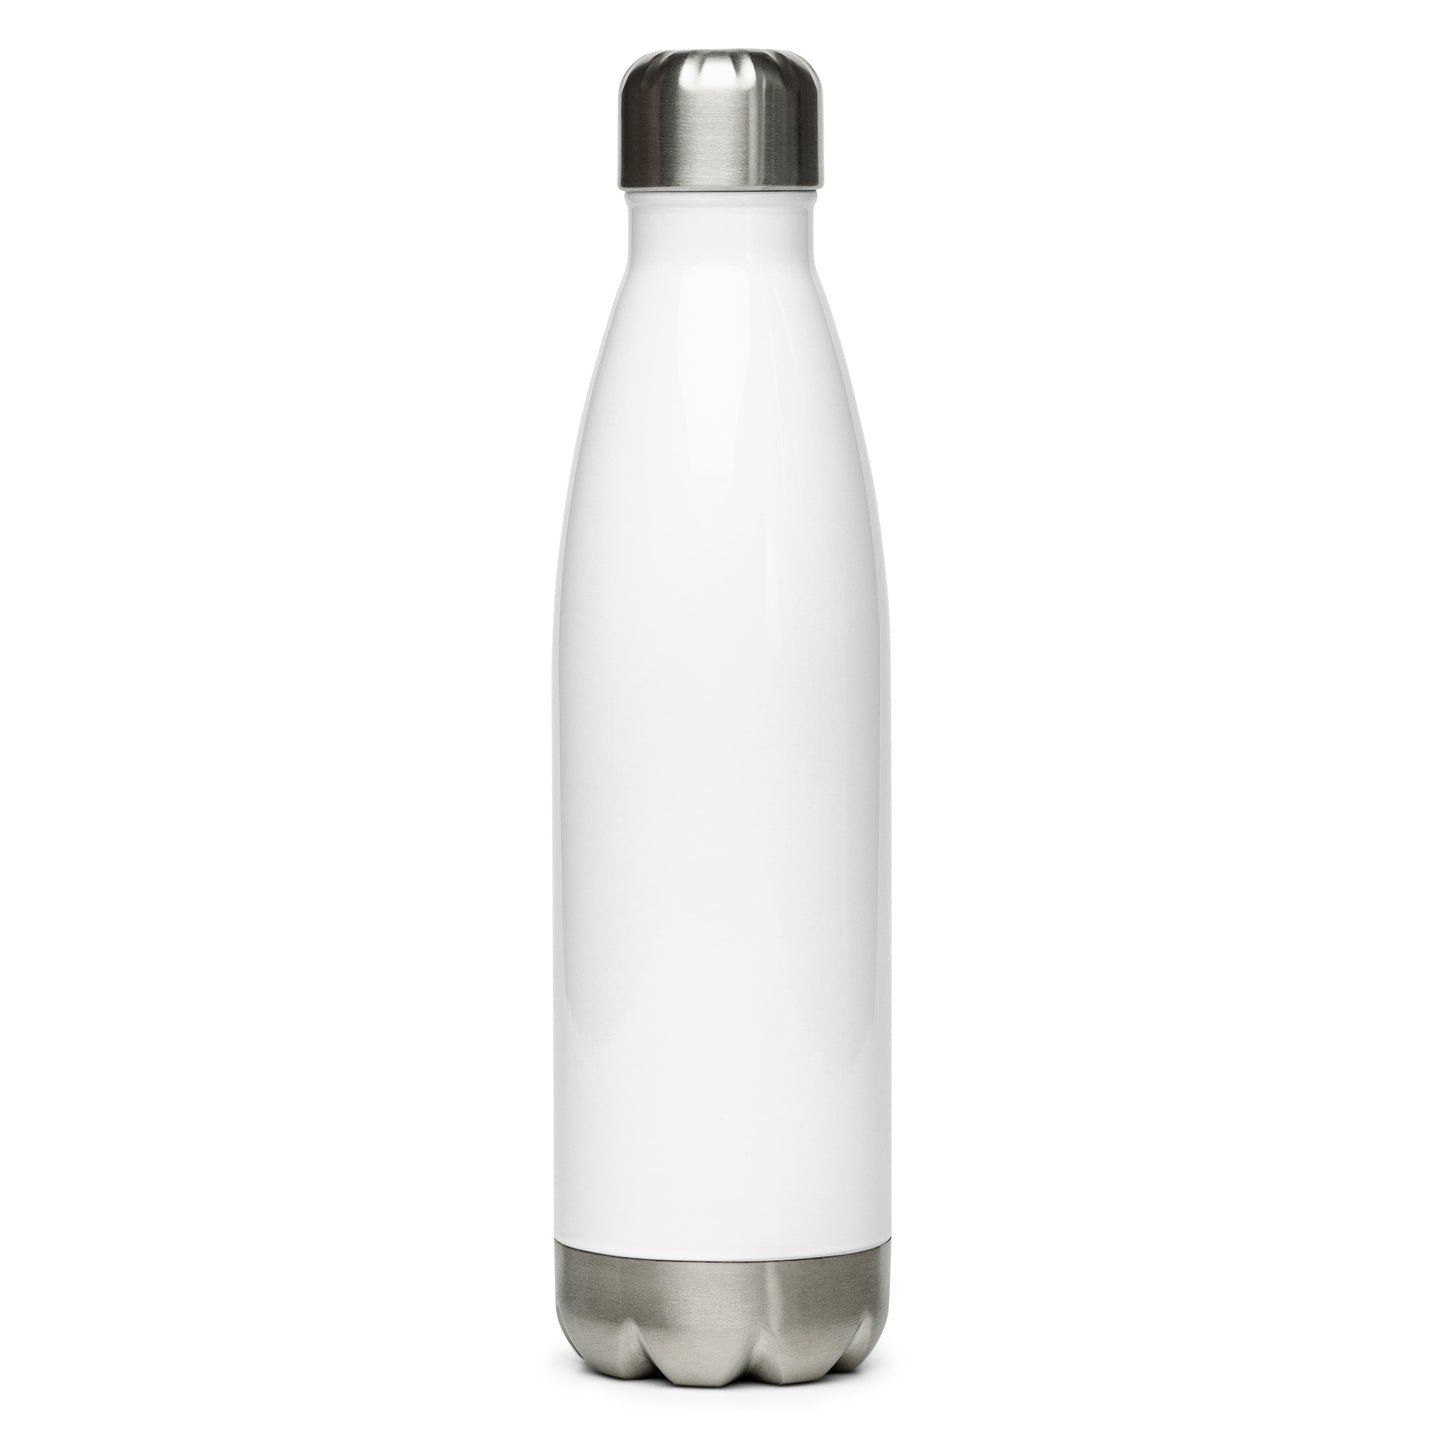 Grailz Comix Stainless Steel Water Bottle